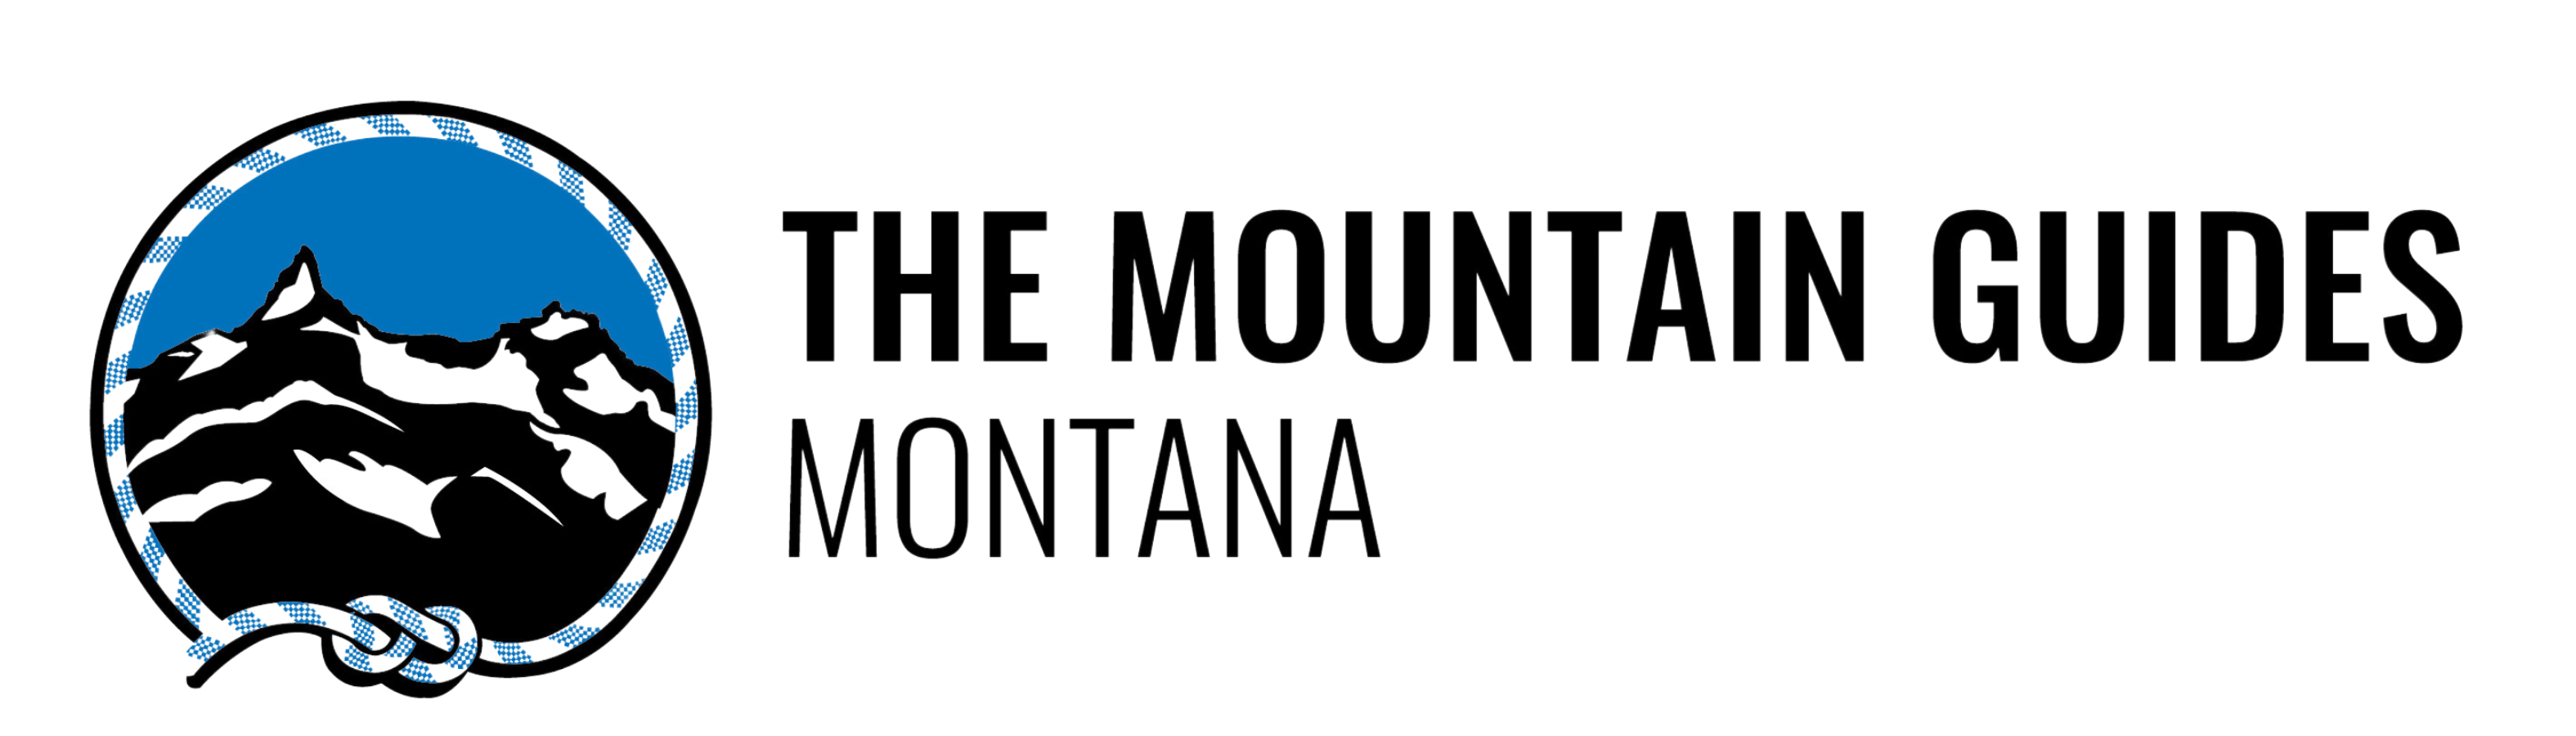 The Mountain Guides Montana